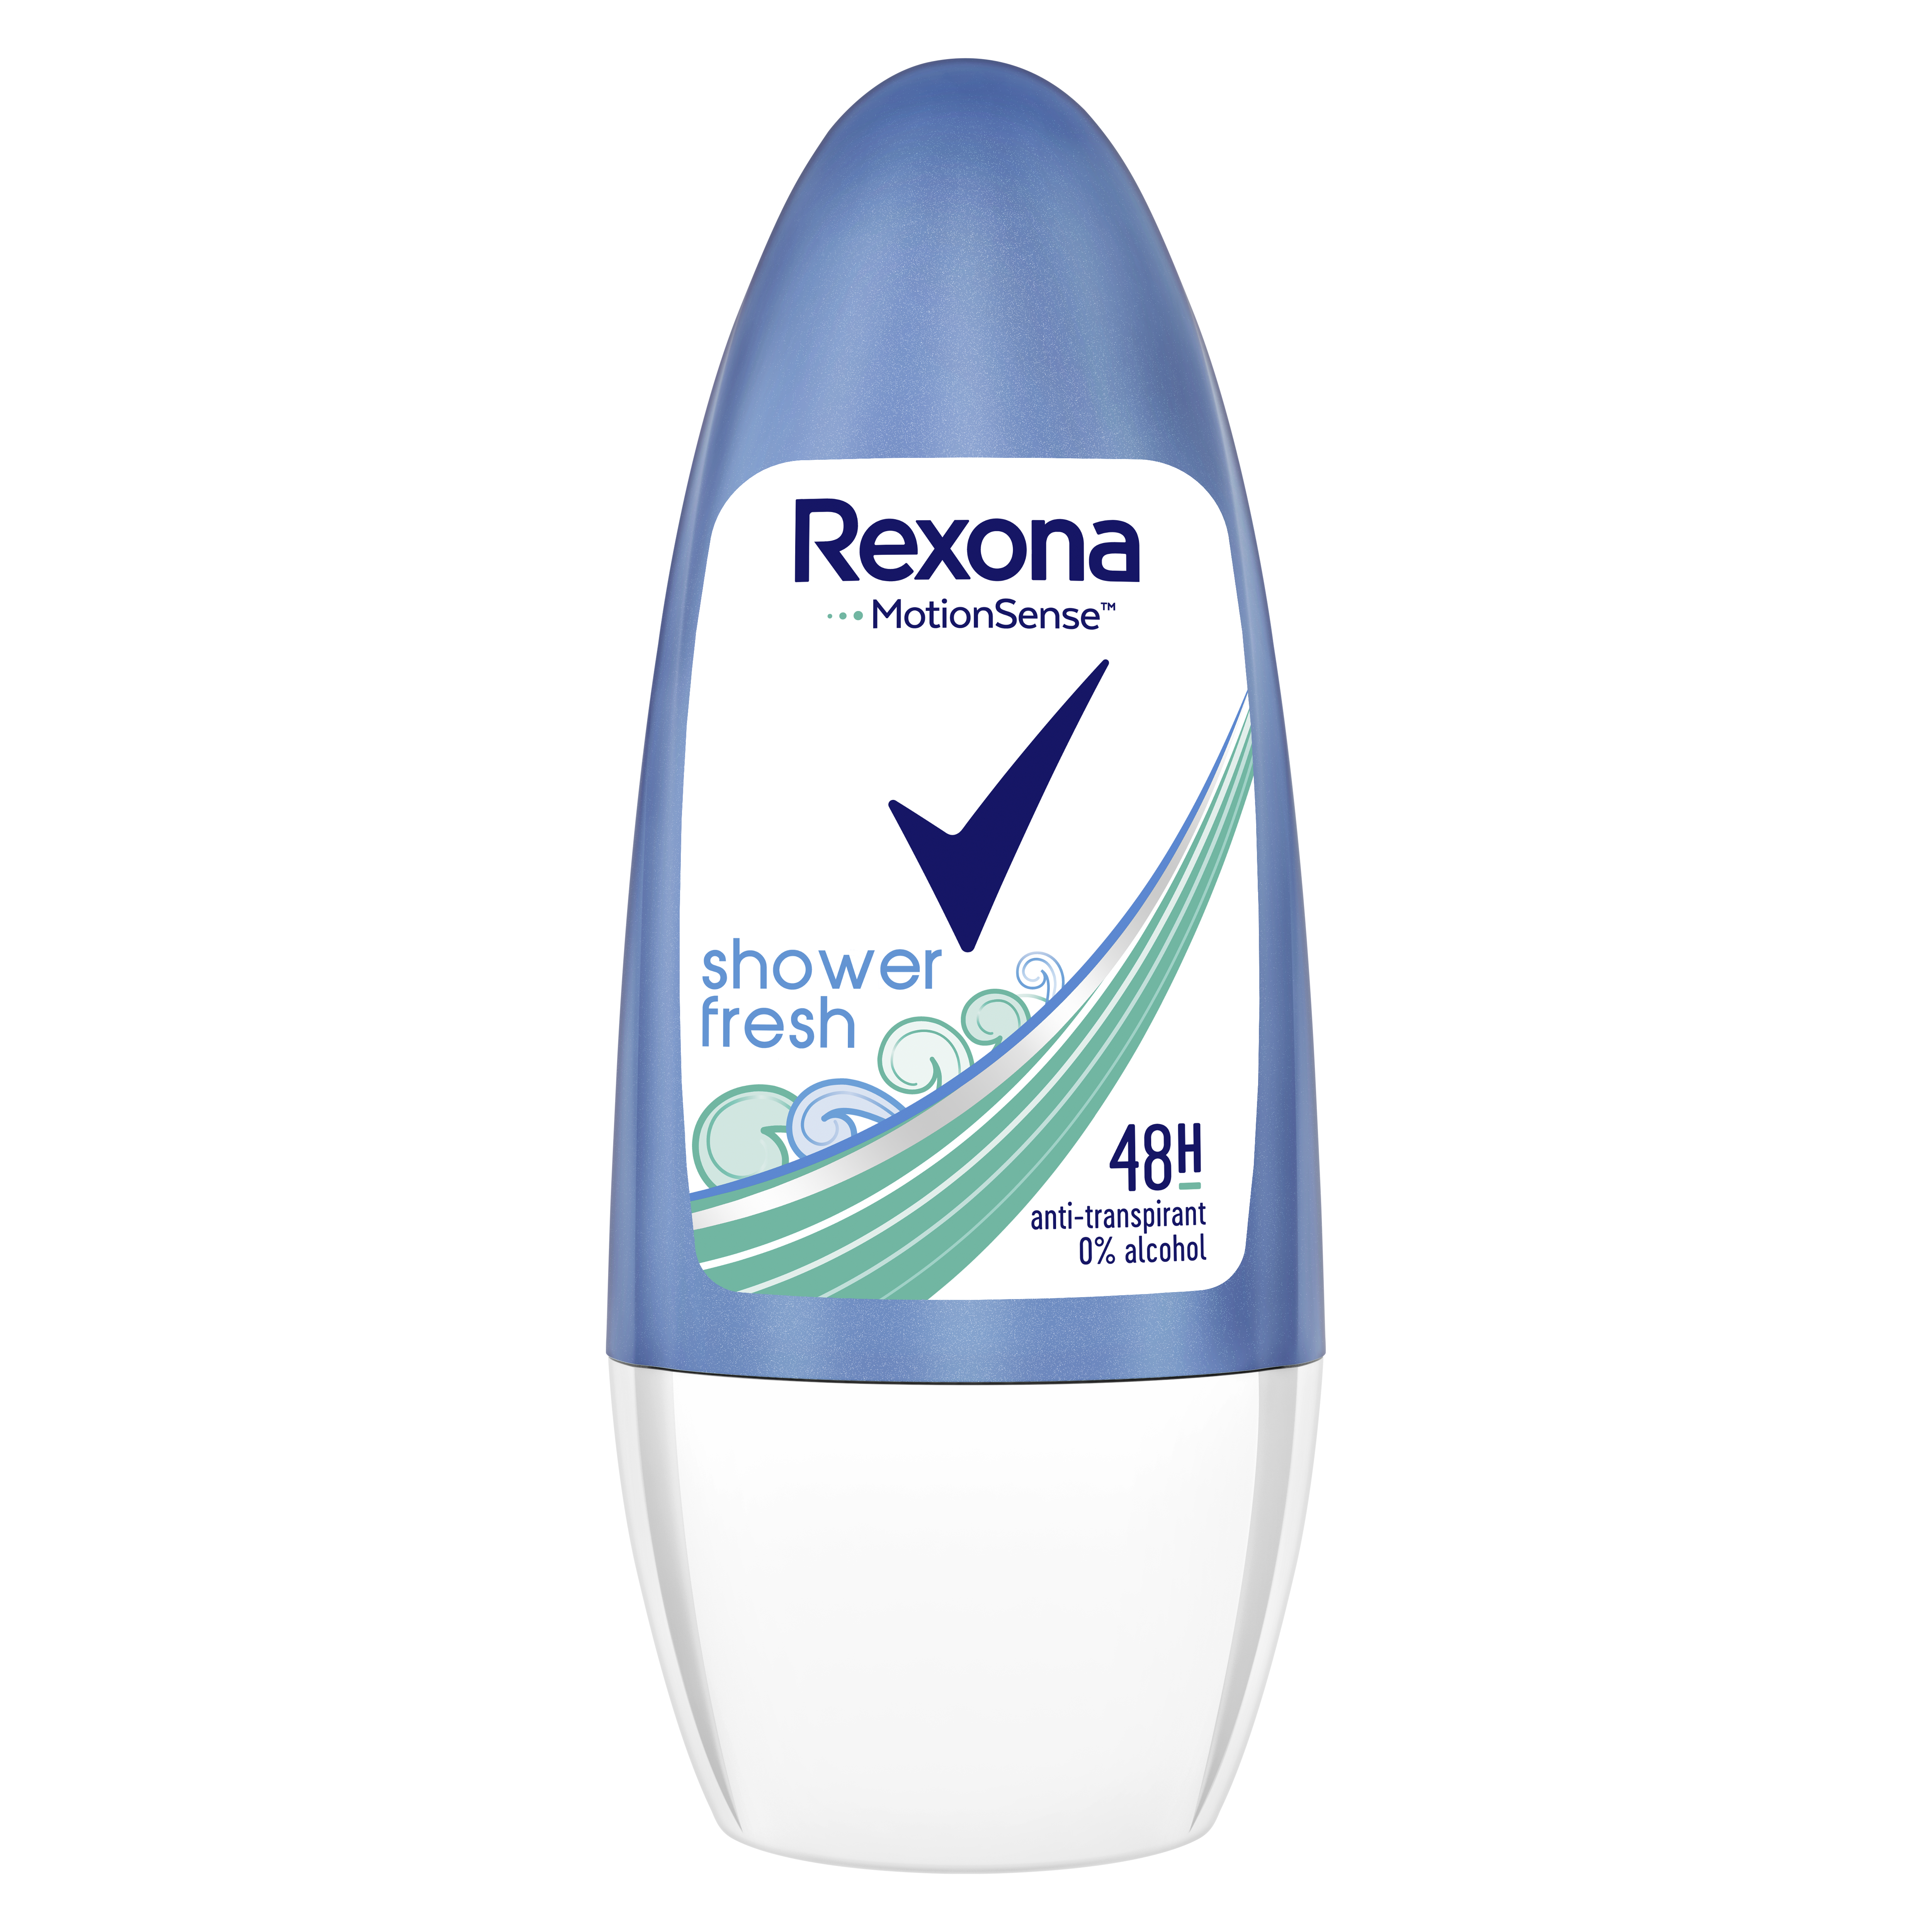 Fresh антиперспирант. Дезодорант Rexona ((Shower clean). Дезодорант Рексона женский шариковый. Rexona дезодорант для женщин шариковый. Рексона спрей Shower Fresh.